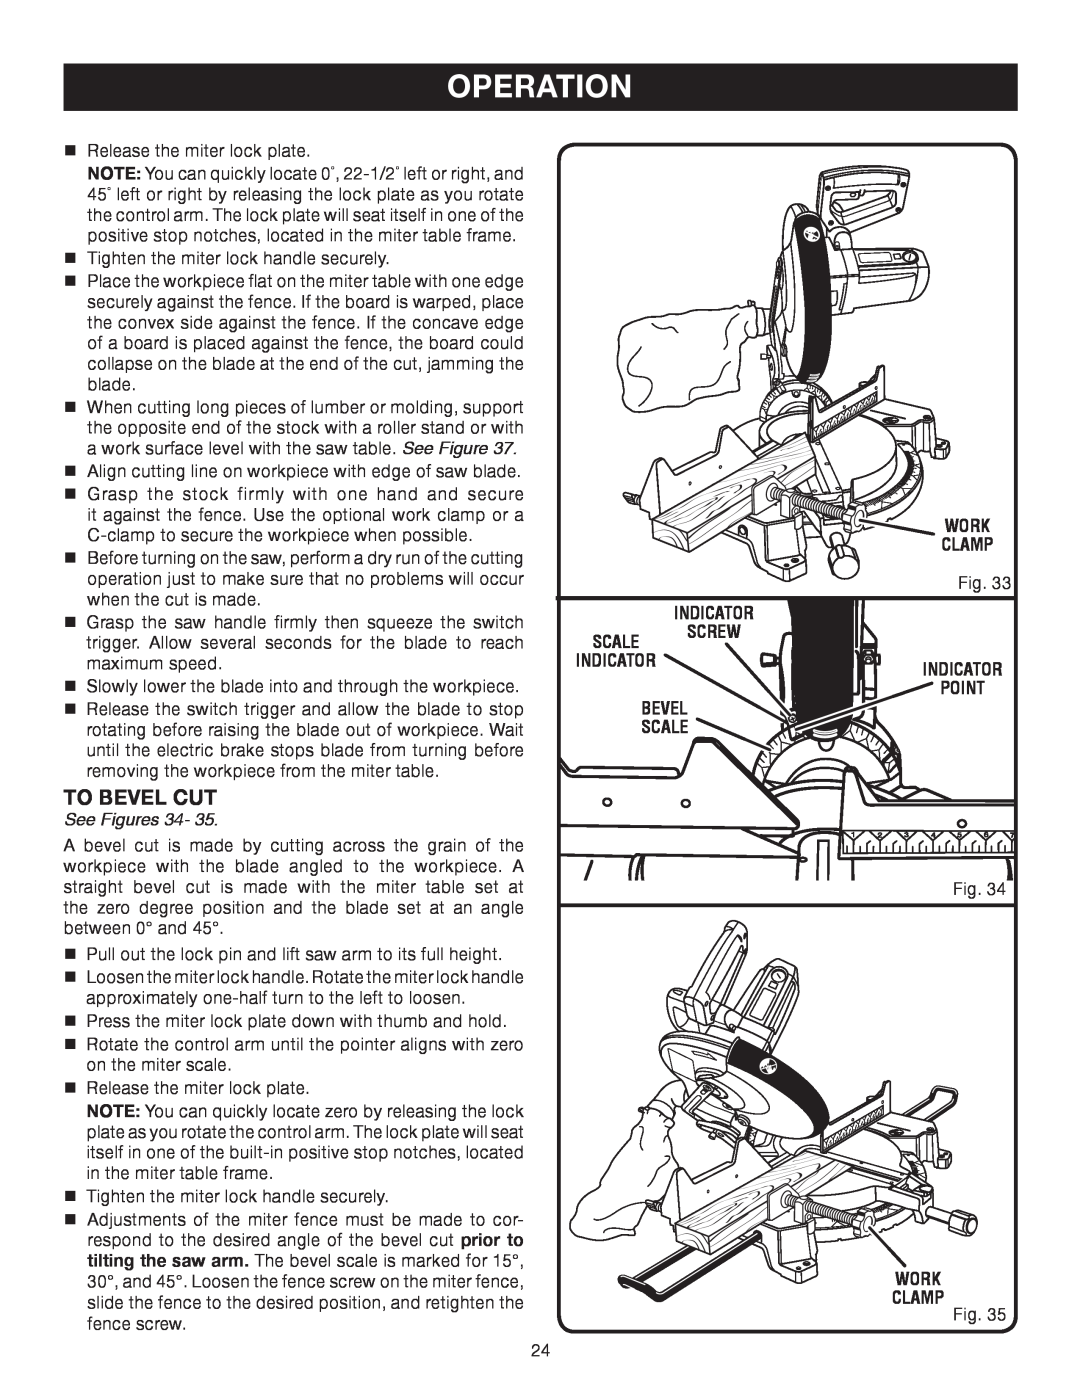 Ryobi TS1552DXL manual To Bevel Cut, Operation, See Figures 34 